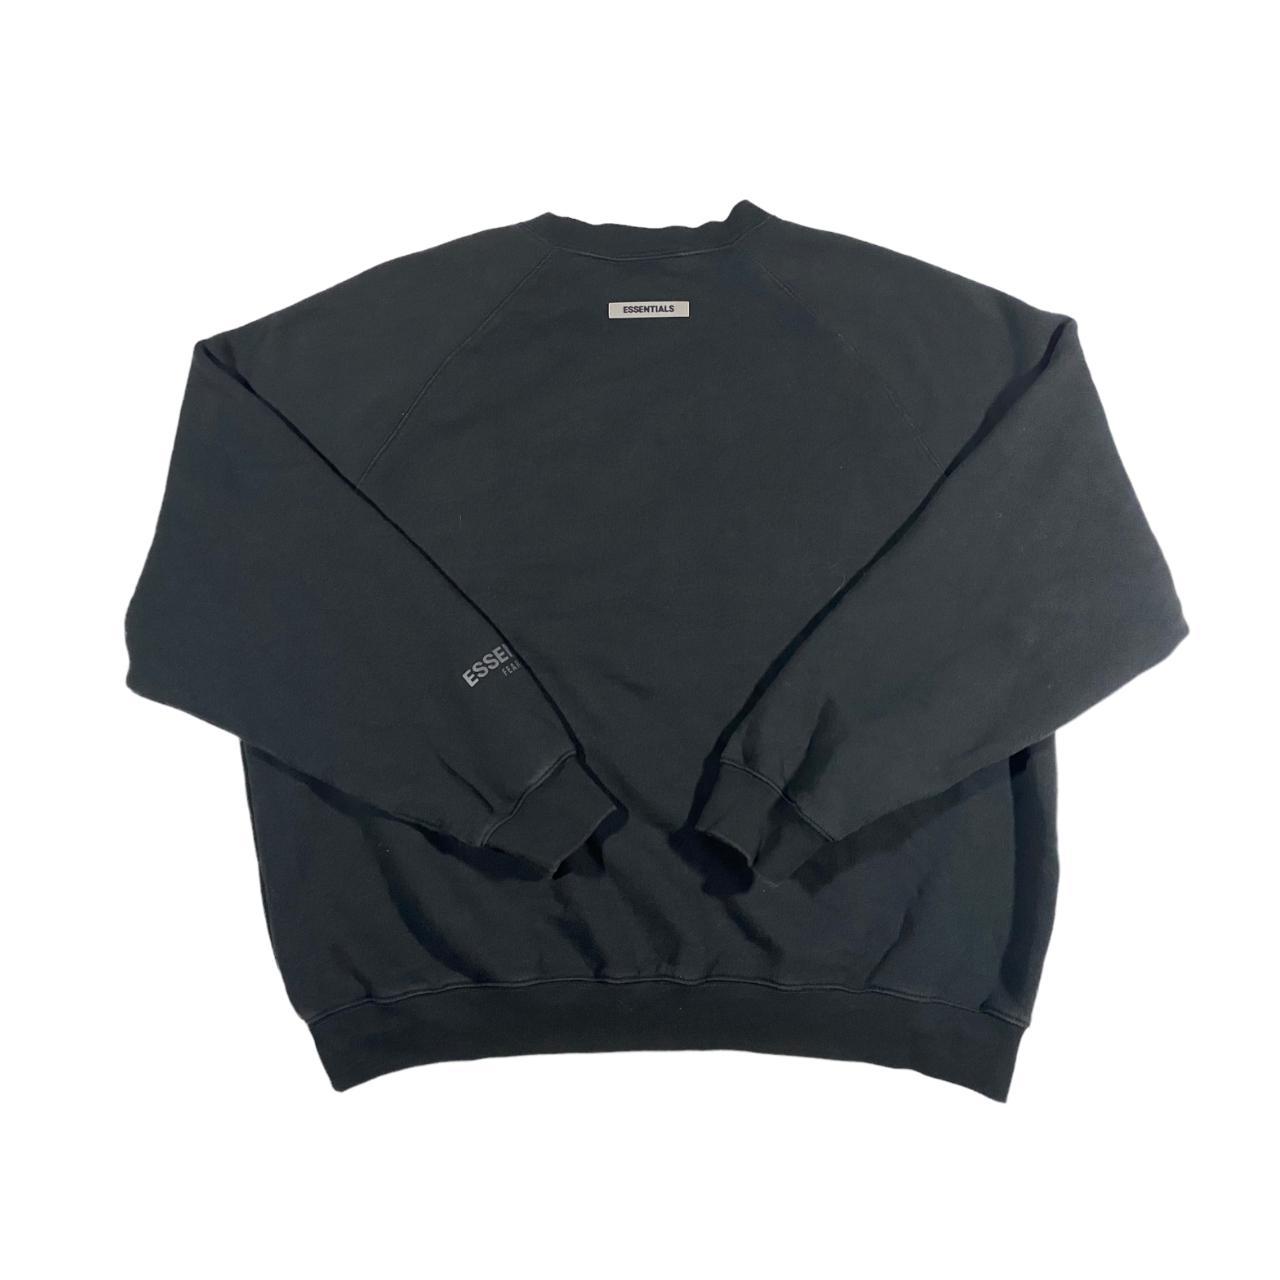 Product Image 2 - Streetwear | Lounge Oversize Sweater

Brand: